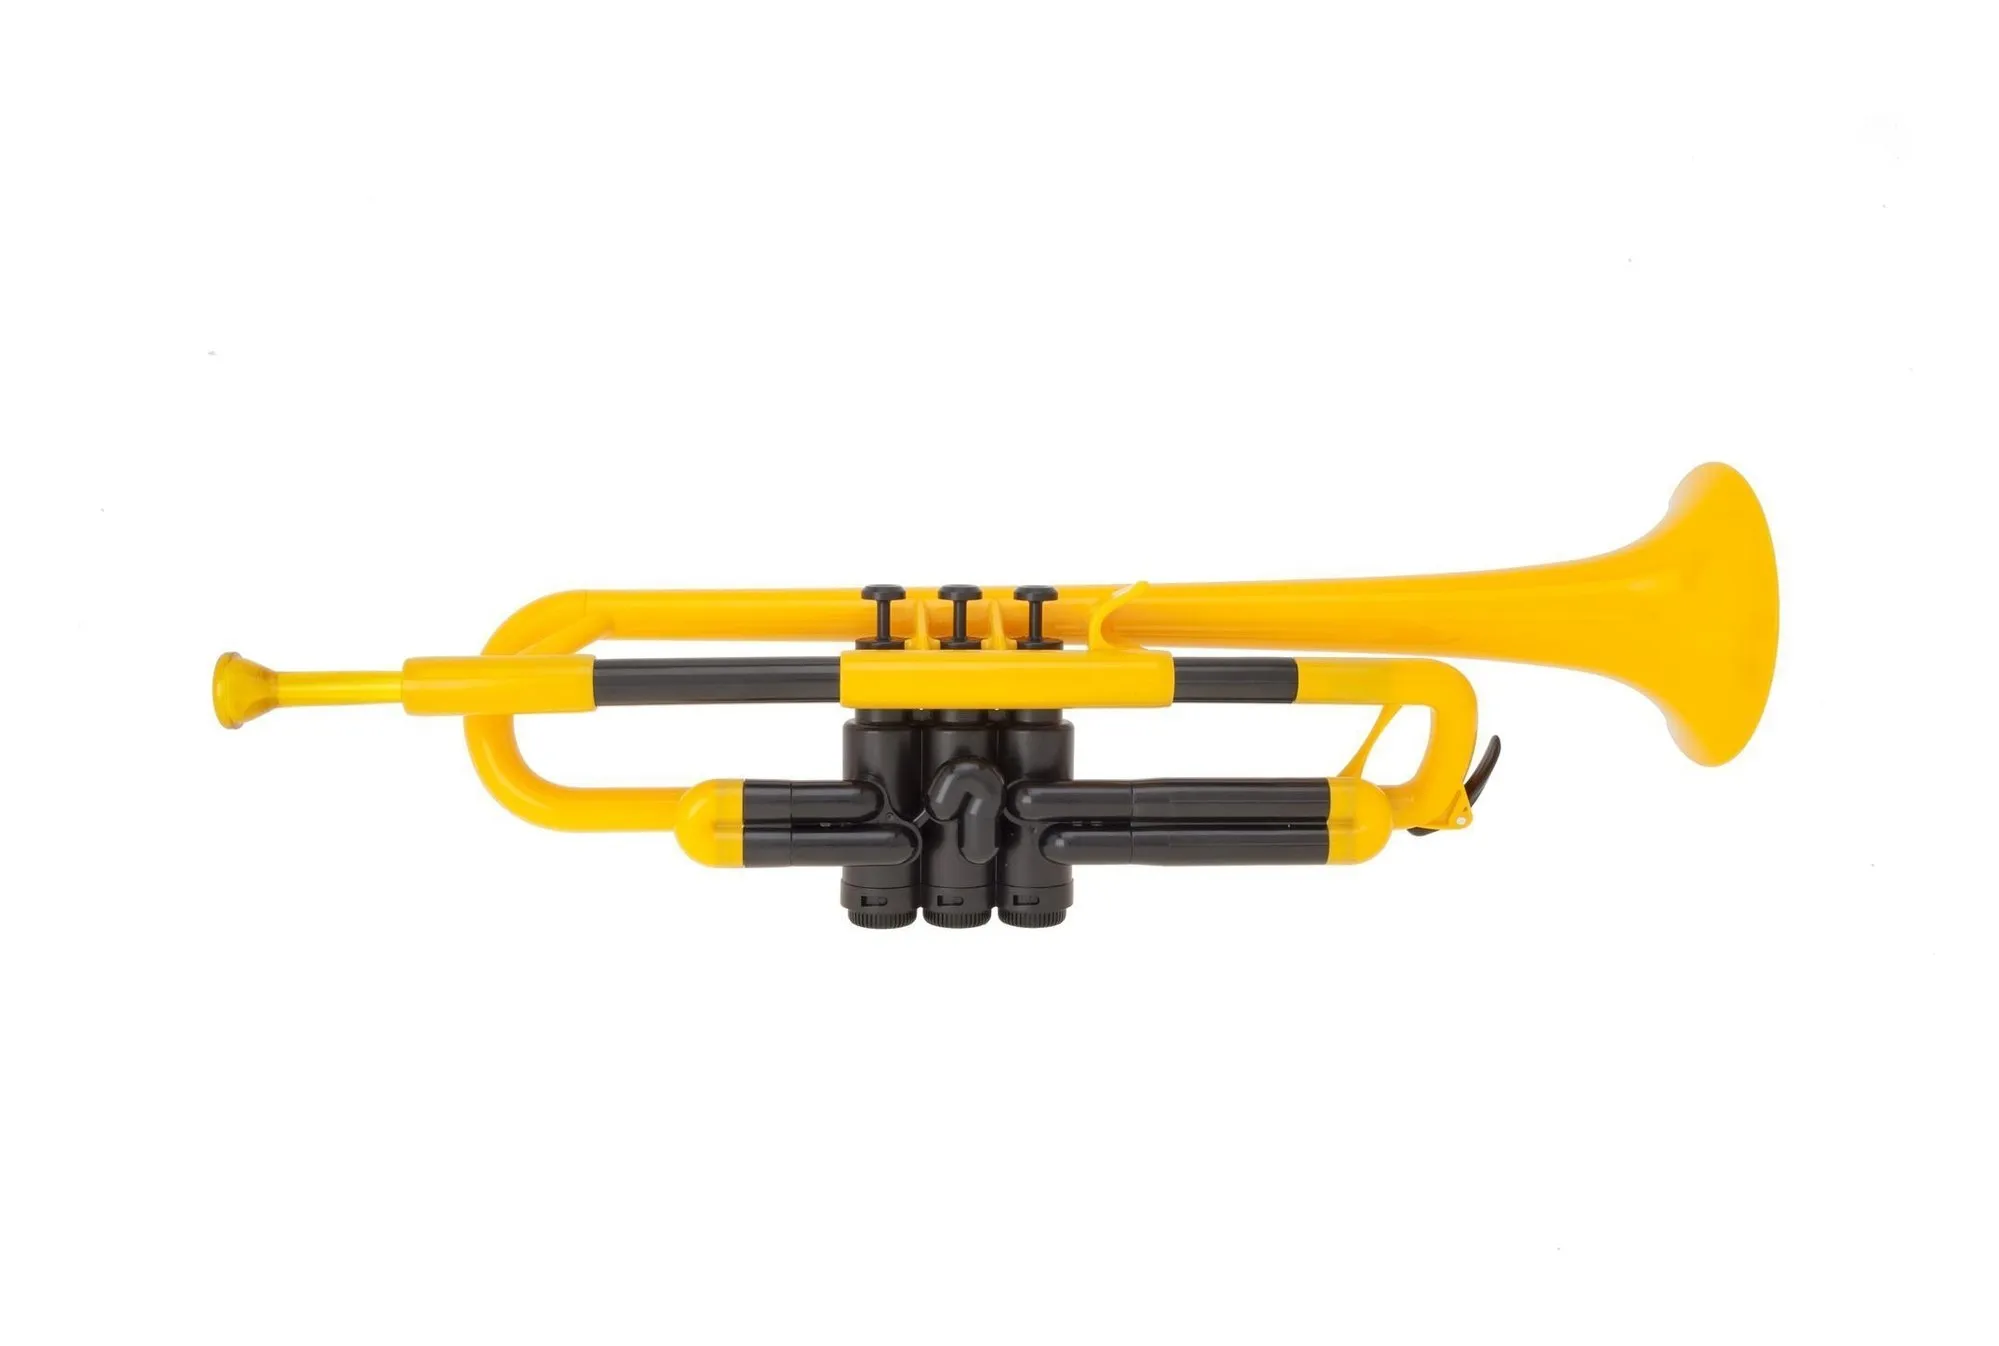 Kunststoff-Trompete Gelb